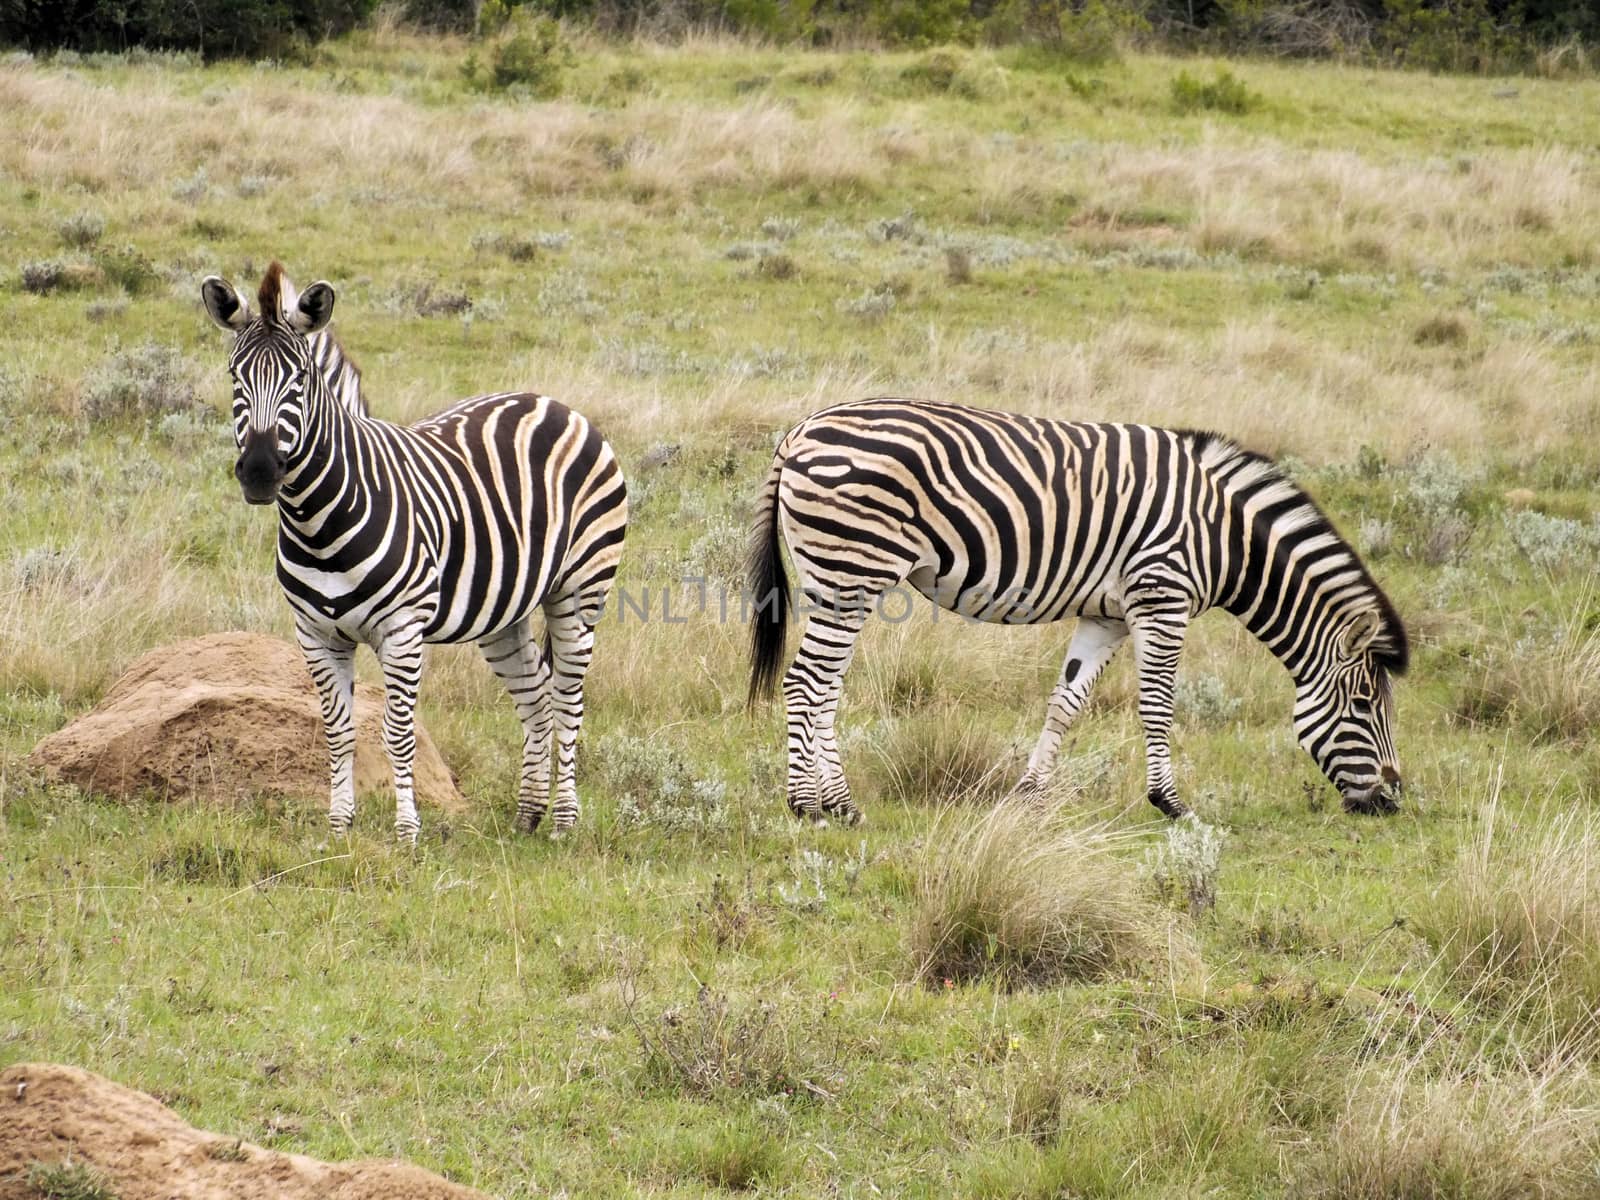 Zebra Feeding on the grass plains of South Africa's Addo National Park